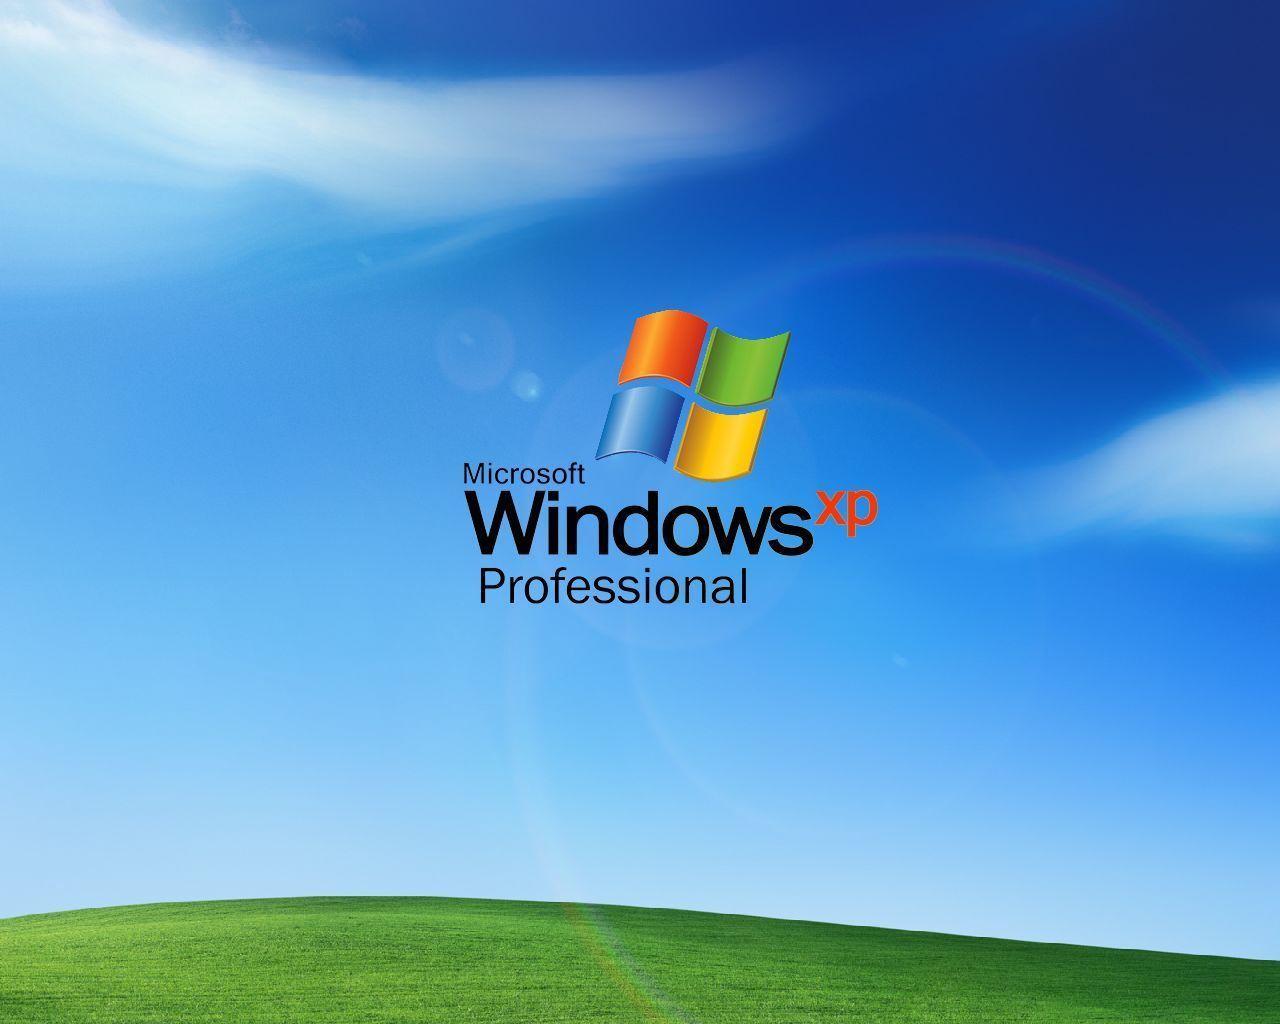 Windows XP Professional Wallpapers - Wallpaper Cave